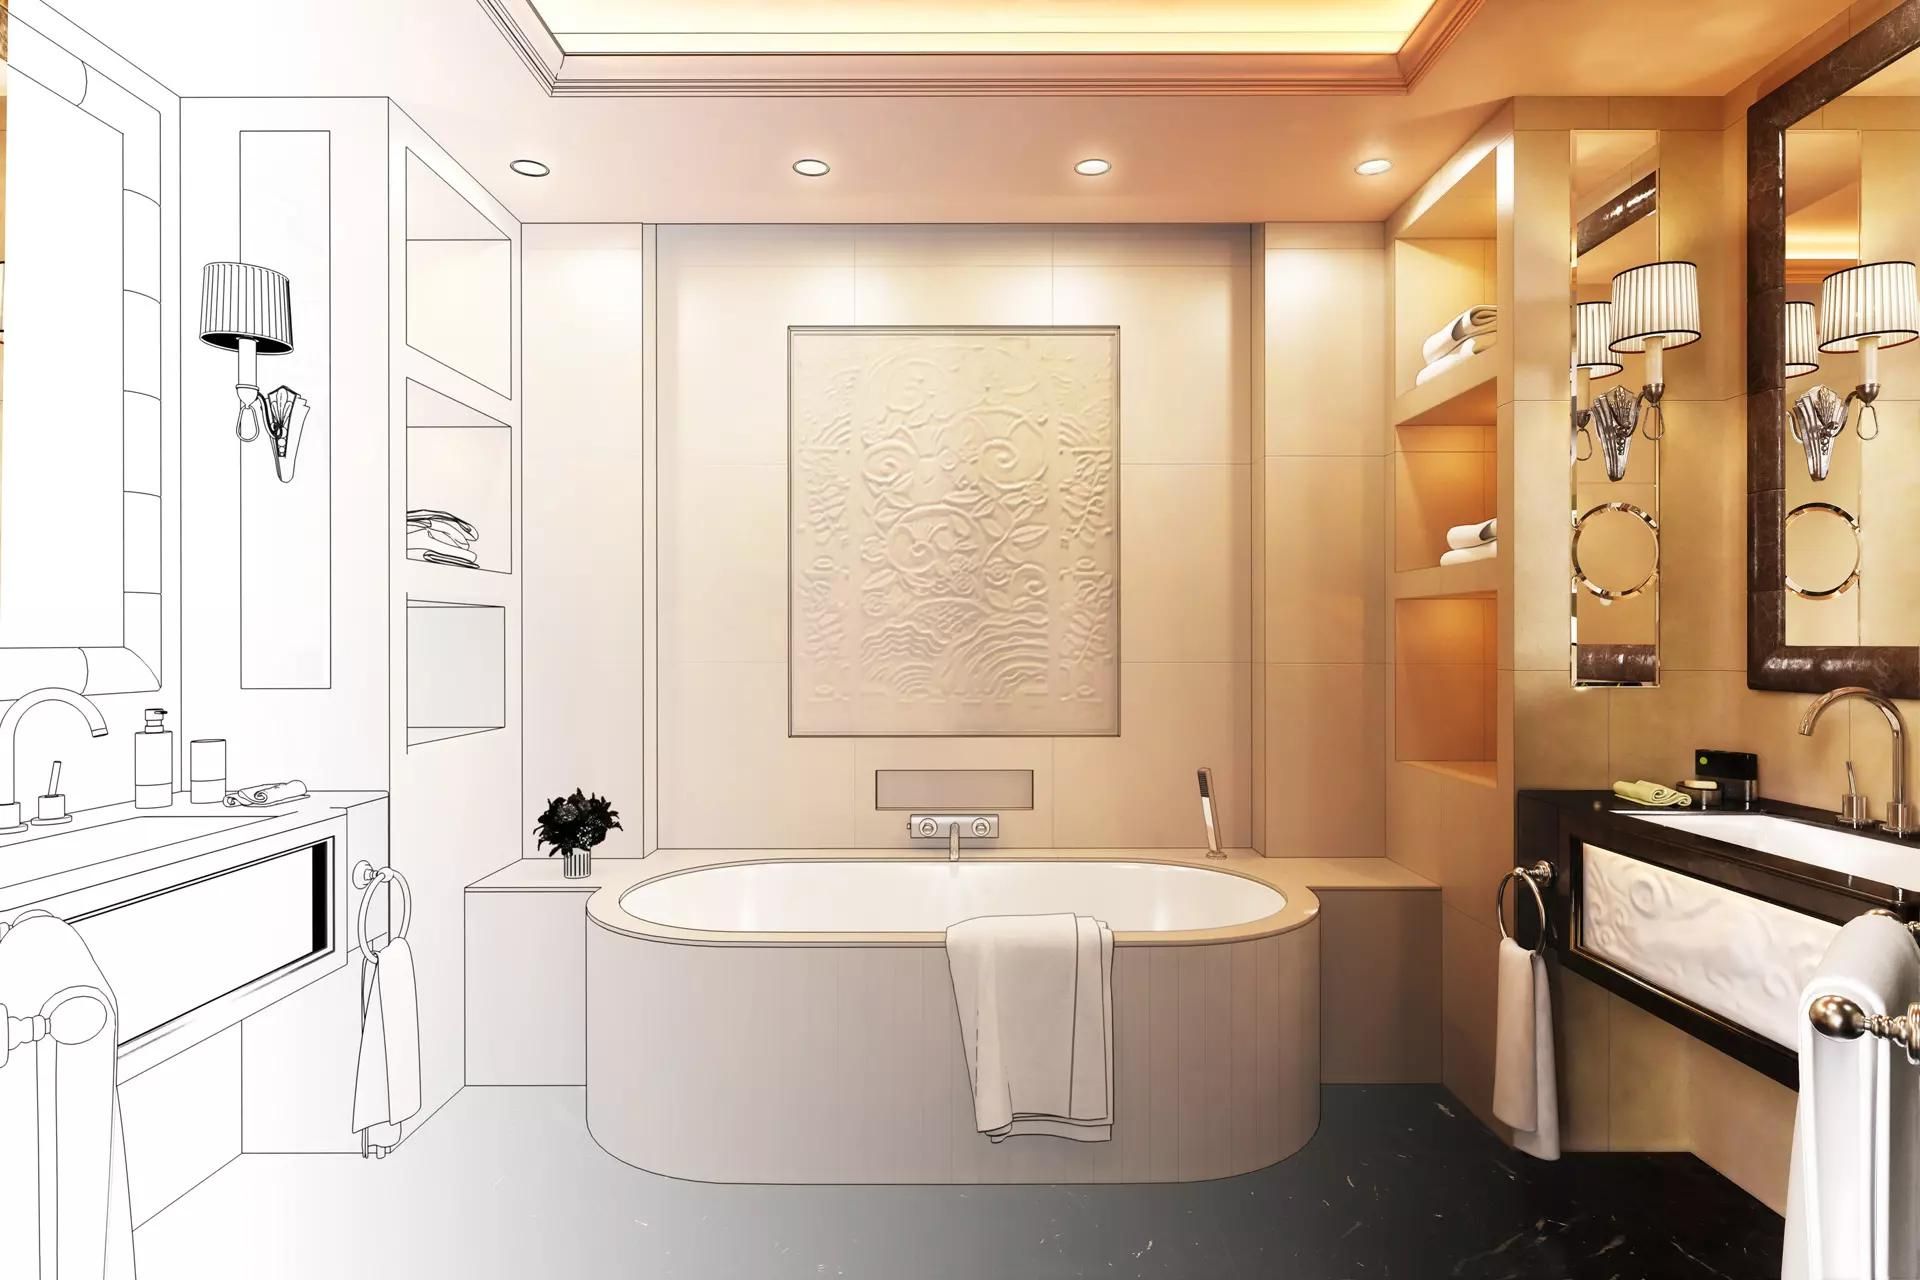 Choosing the Right Contractors for Bathroom Renovations